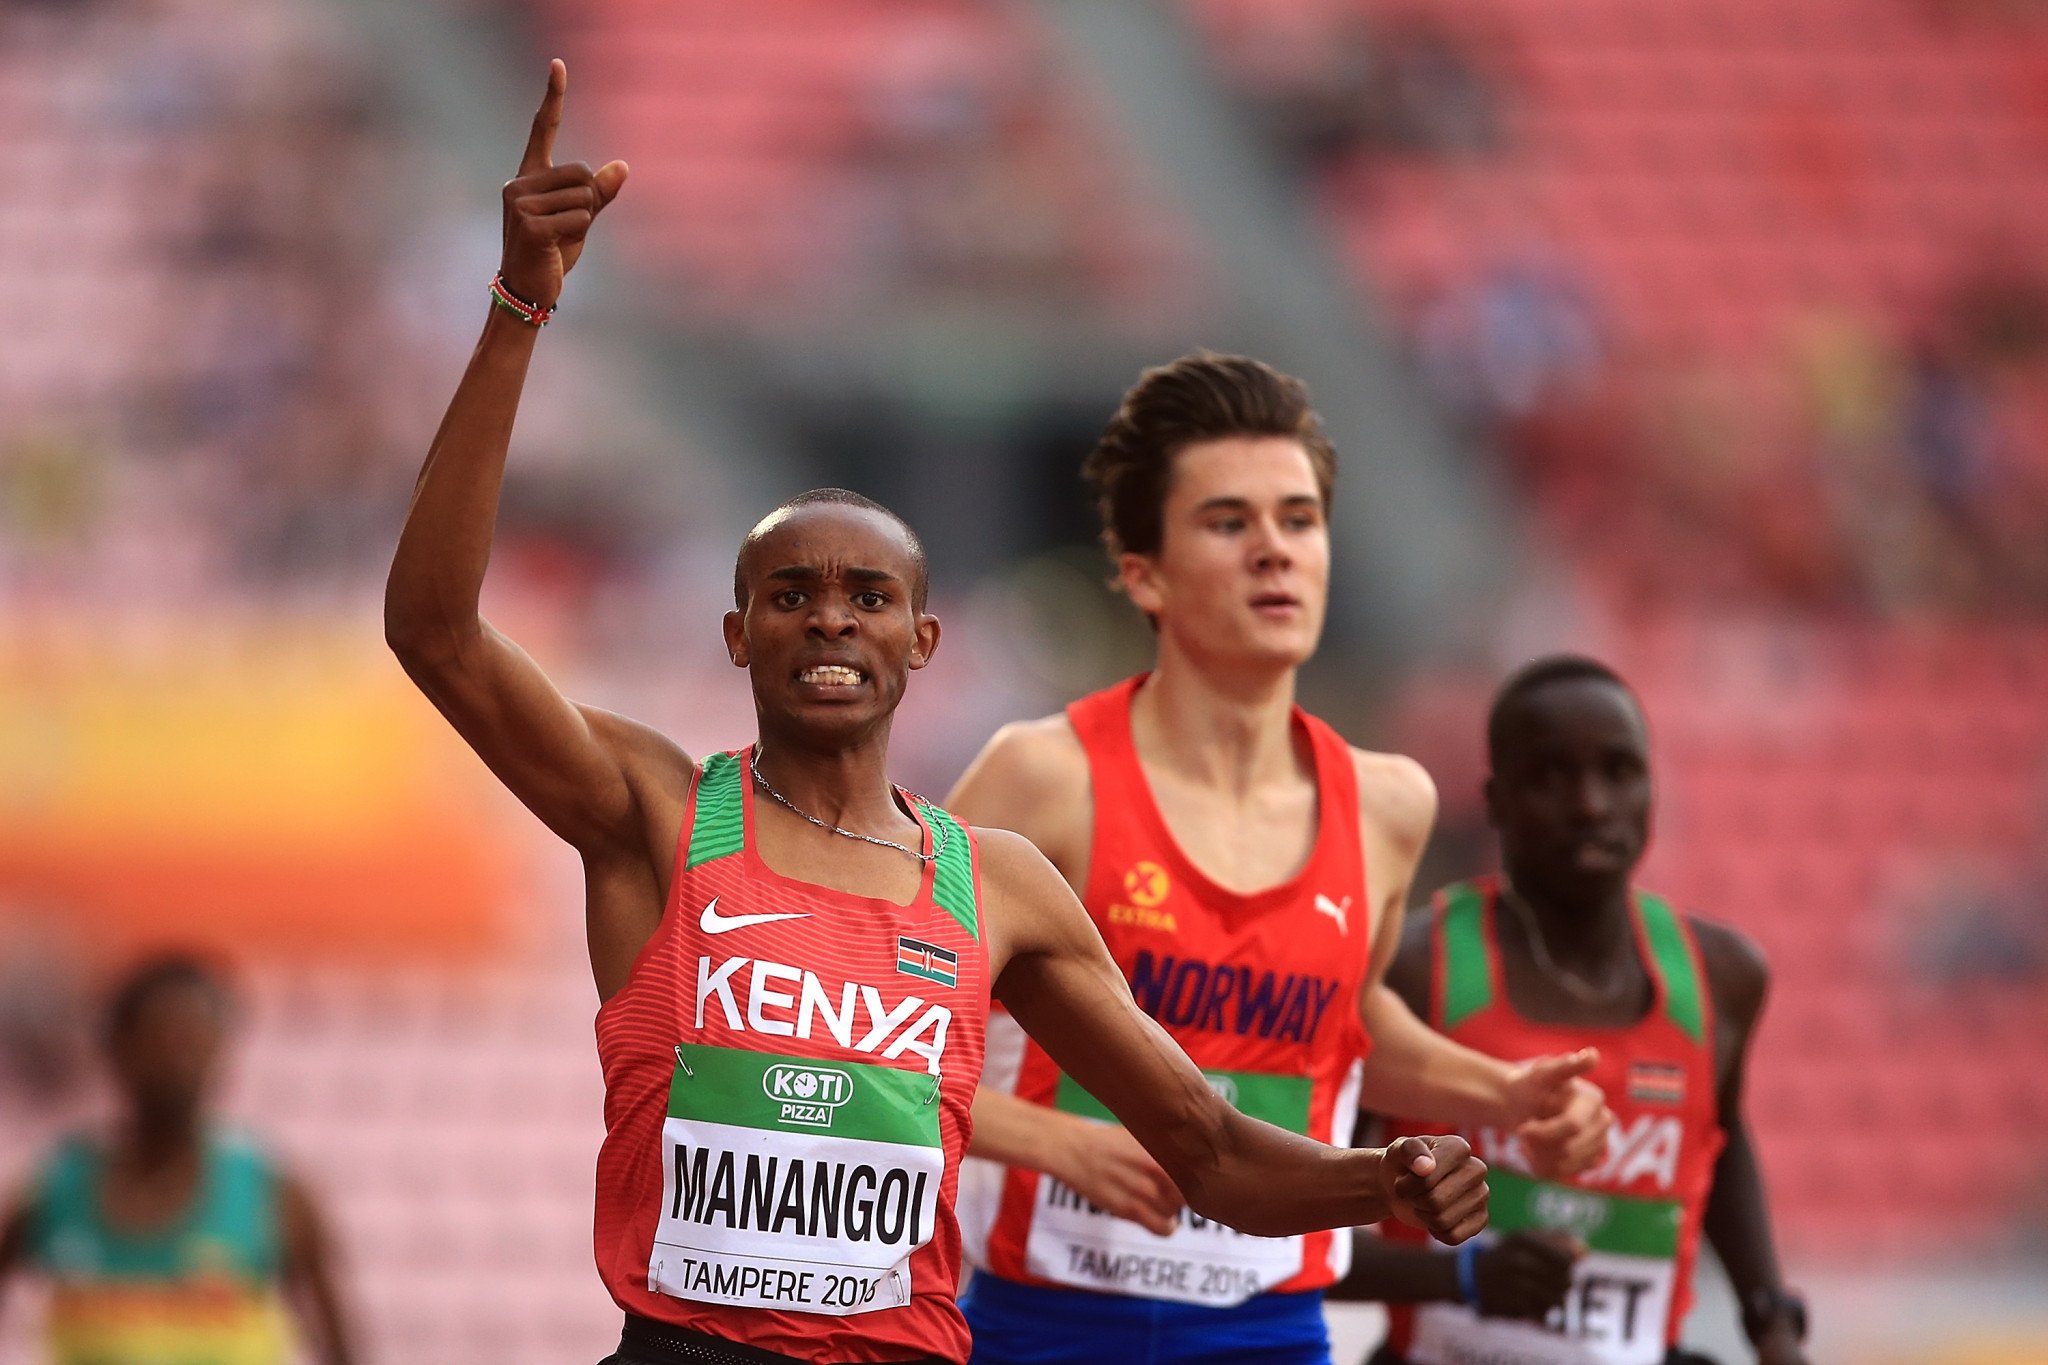 Manangoi edges Ingebrigtsen to IAAF World Under-20 1,500m gold in Tampere